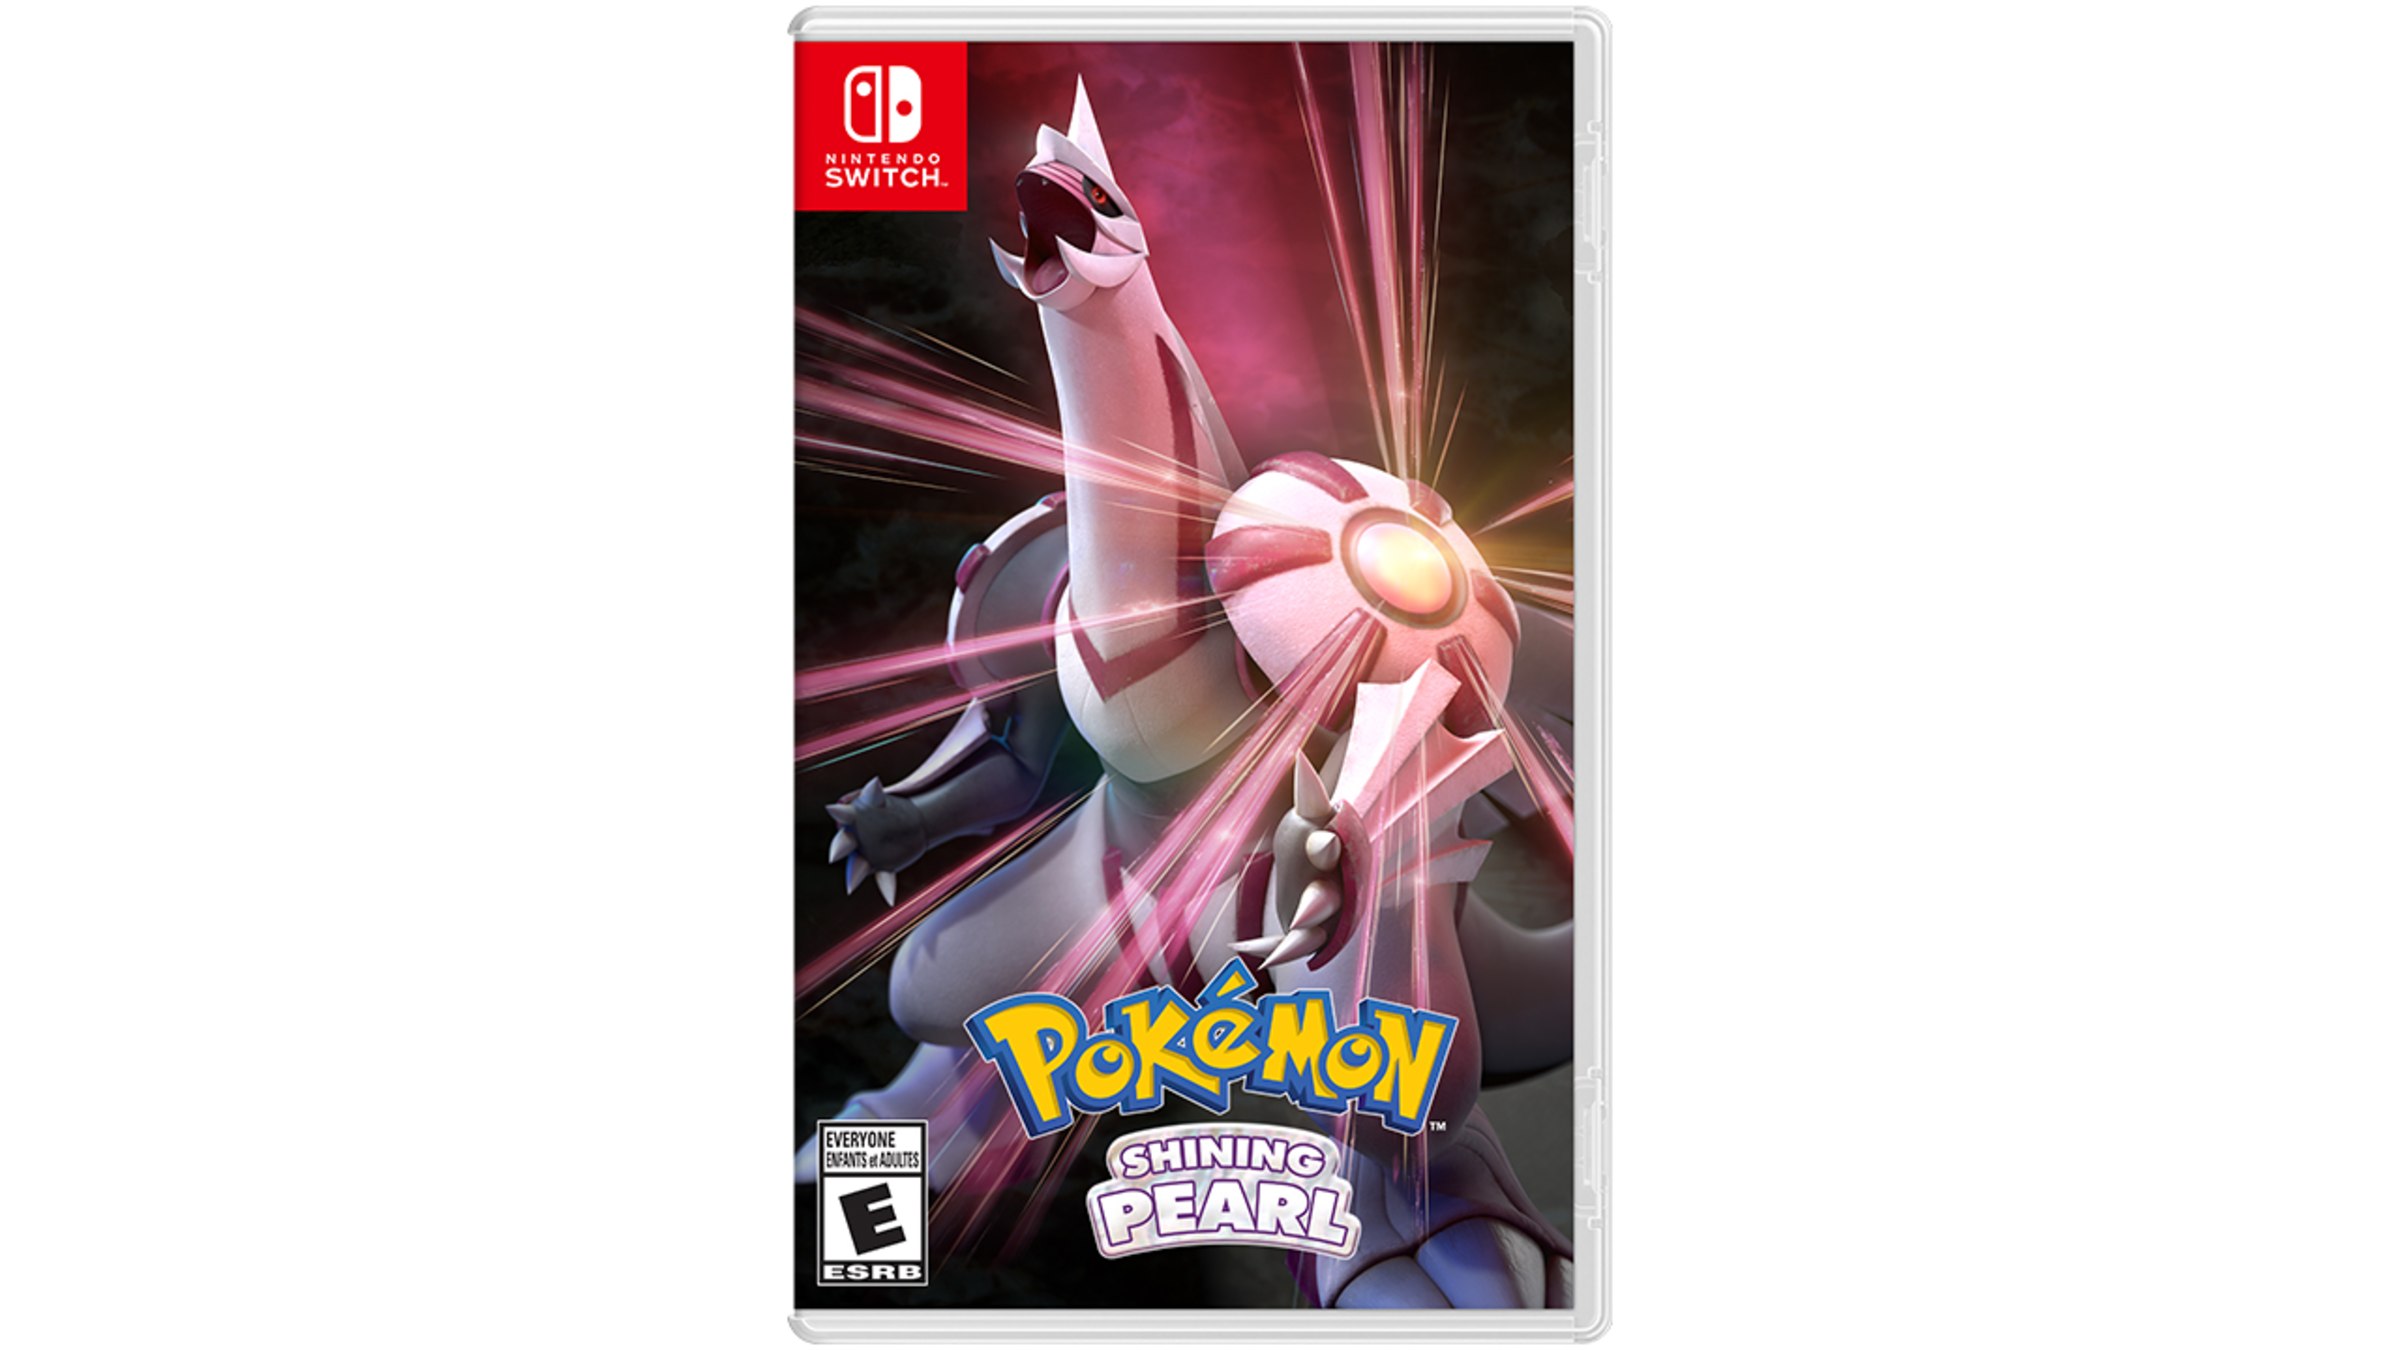 Pokémon Brilliant Diamond & Pokémon Shining Pearl Double Pack - Nintendo  Switch